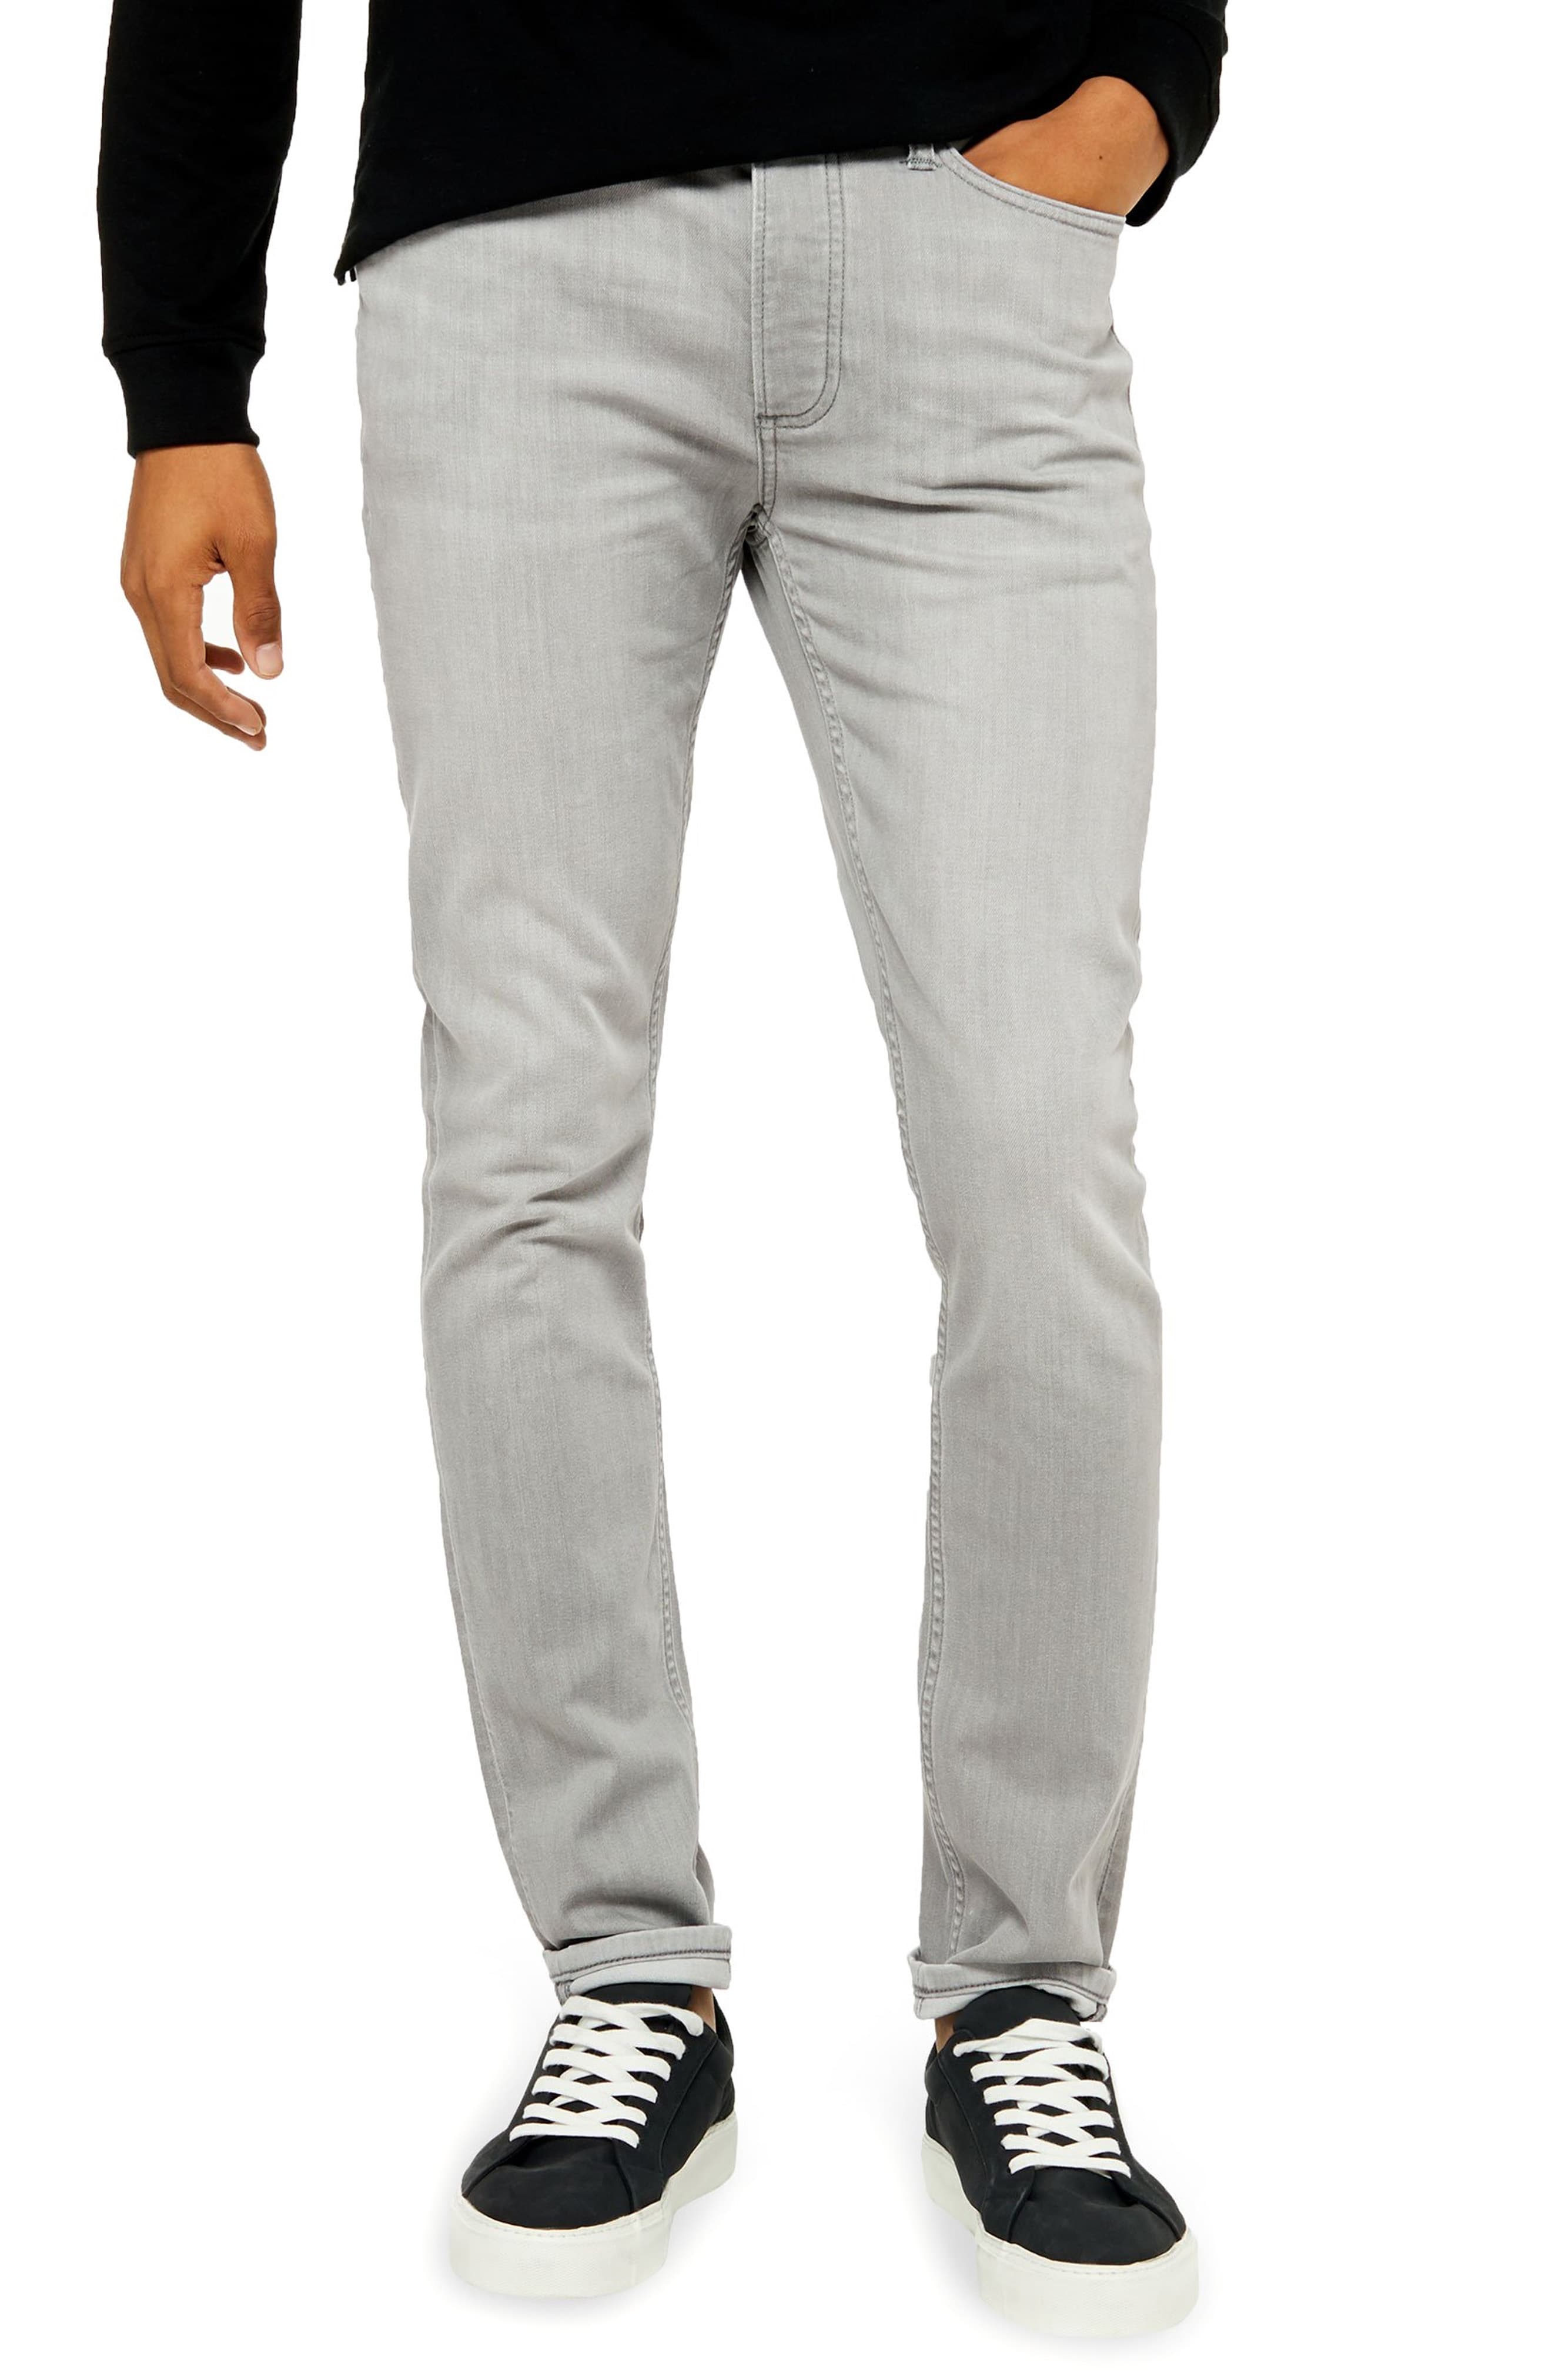 Men’s Topman Skinny Fit Jeans, Size 32 x 34 – Grey | The Fashionisto